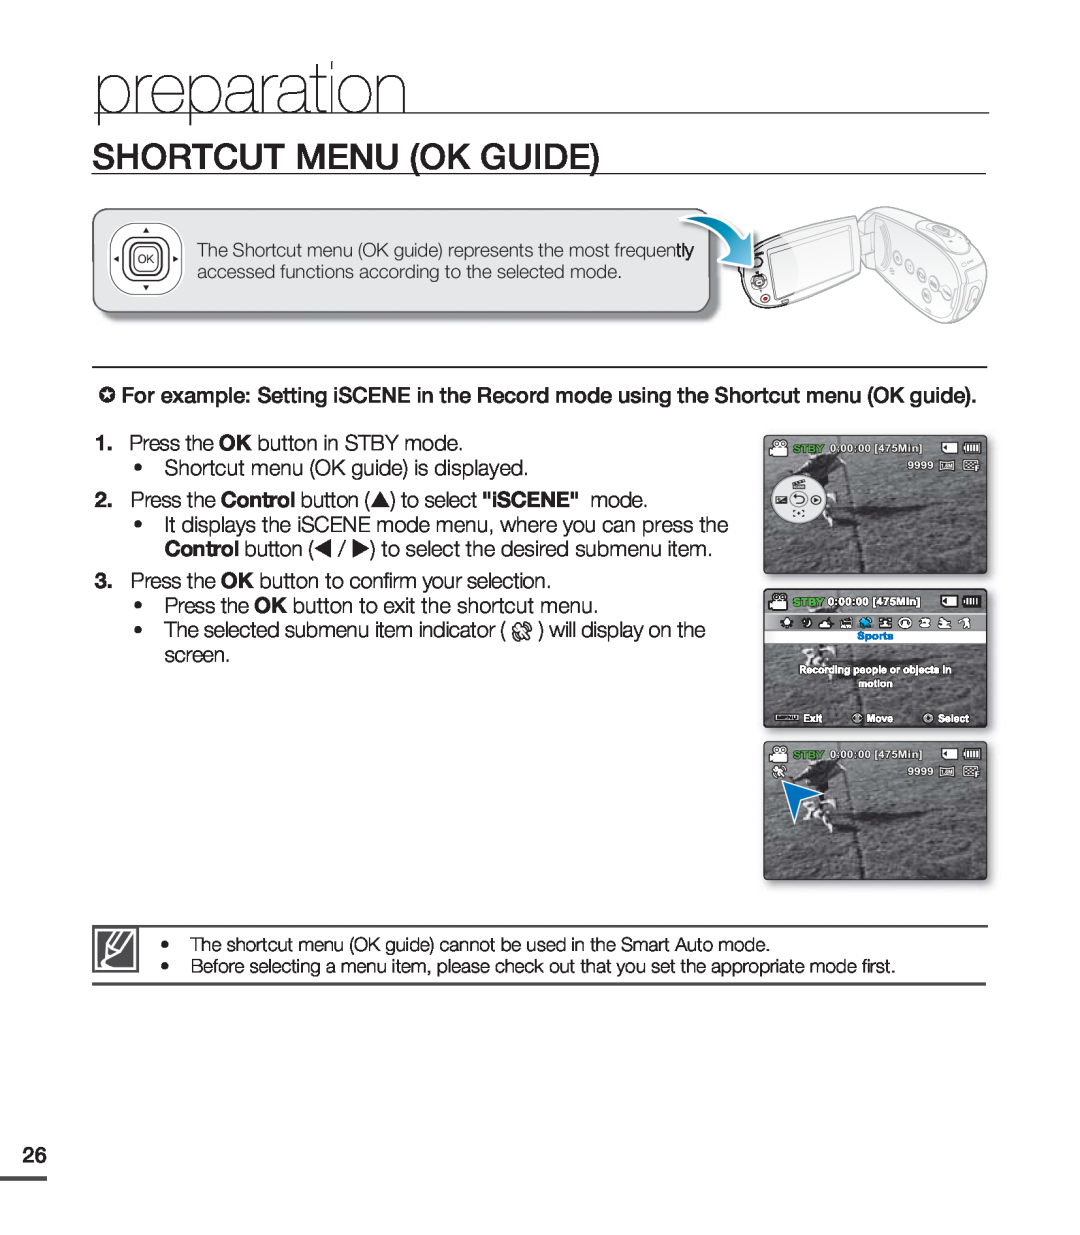 Samsung SMX-C24RP/XIL manual Shortcut Menu Ok Guide, Press the OK button in STBY mode, Shortcut menu OK guide is displayed 